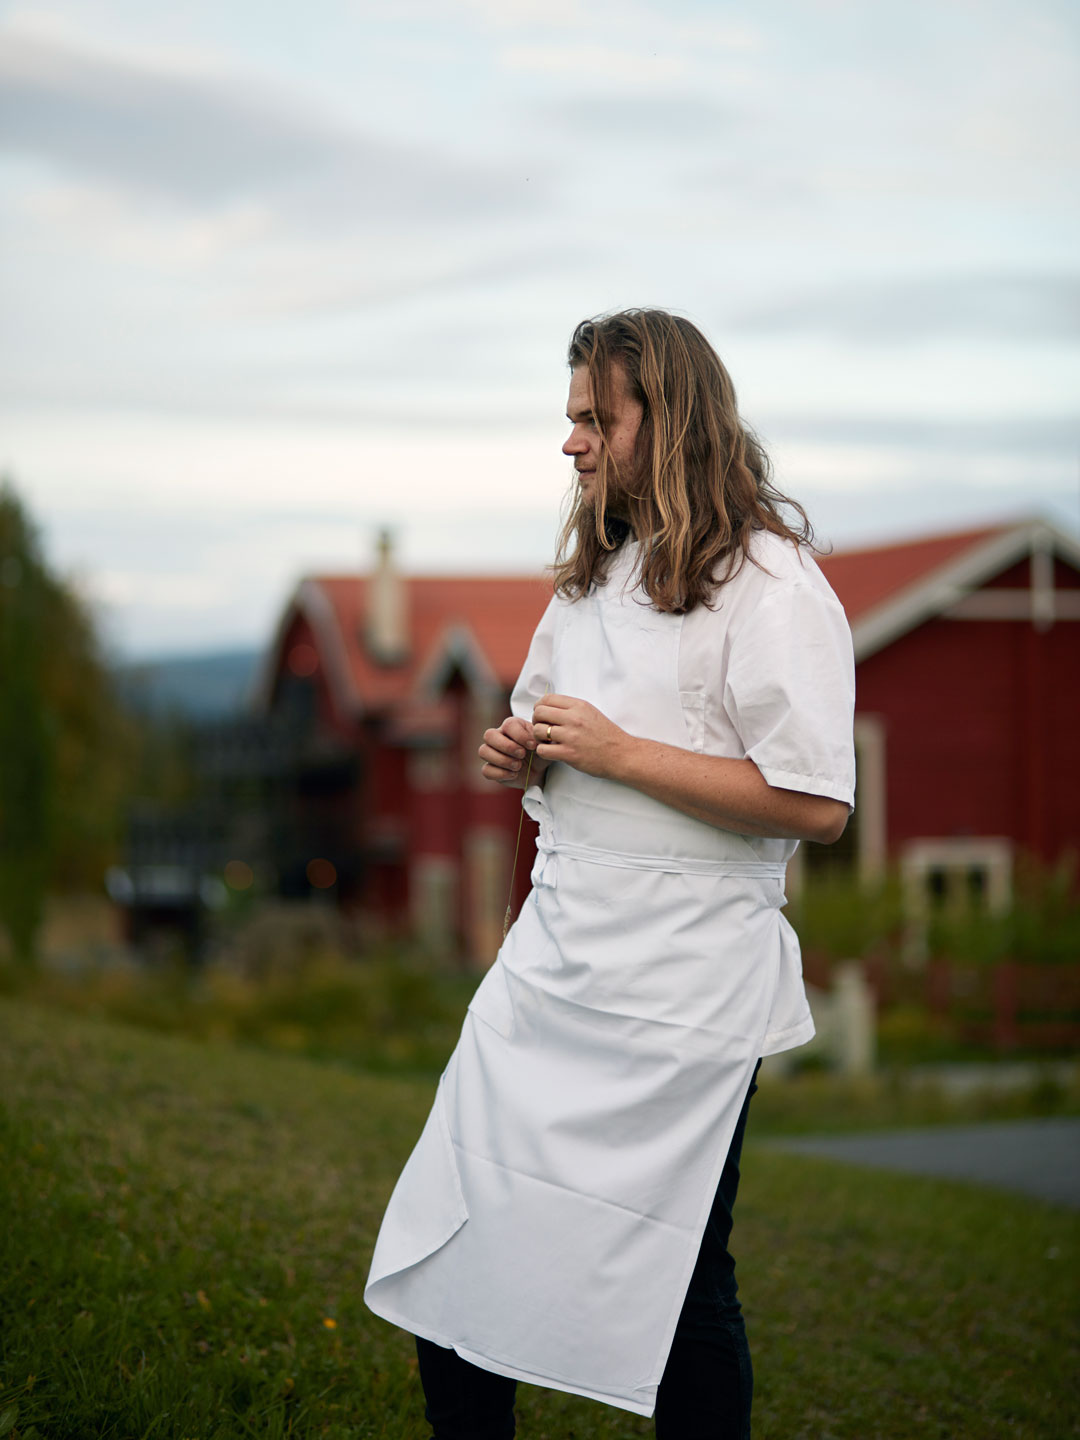 Magnus Nilsson. Photo by Erik Olsson